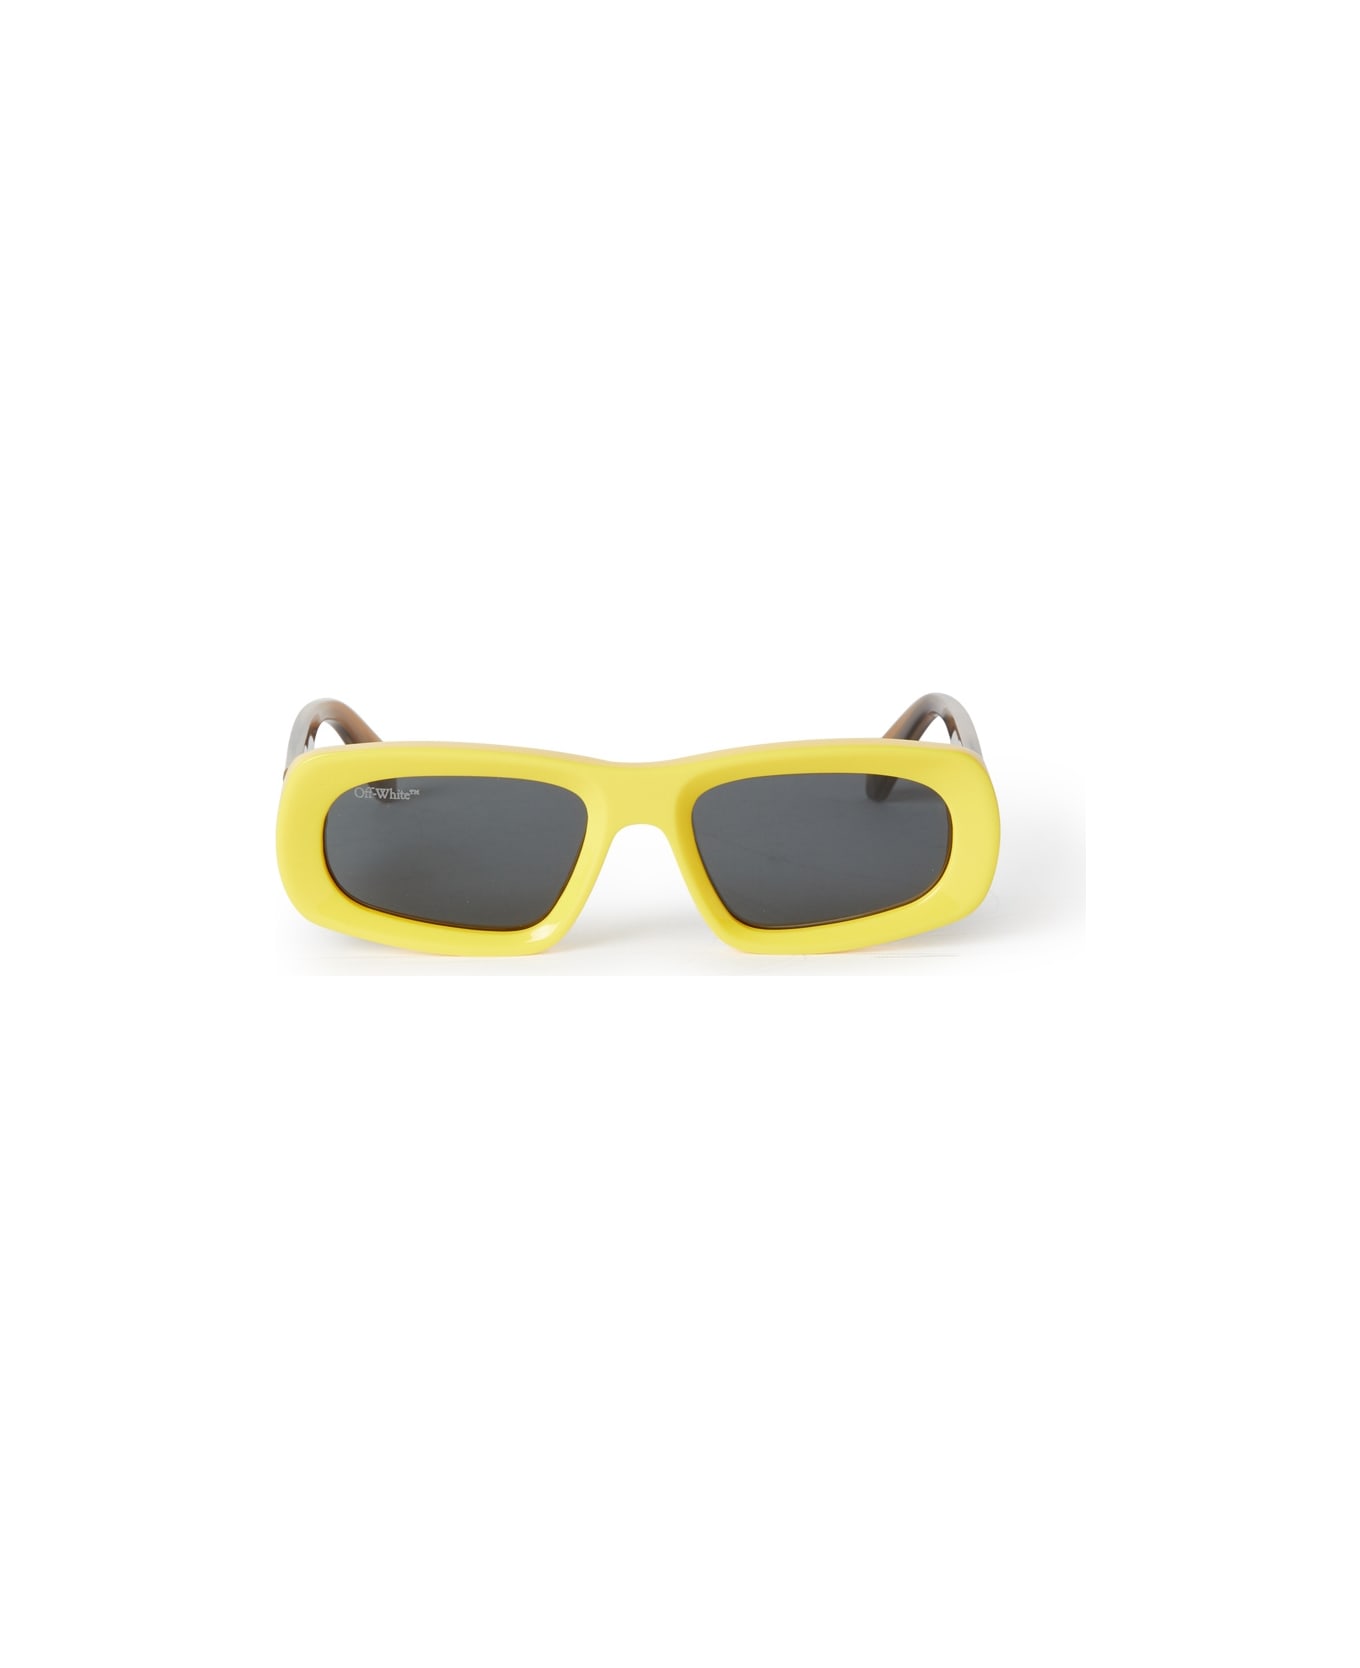 Off-White AUSTIN SUNGLASSES Sunglasses - Yellow サングラス